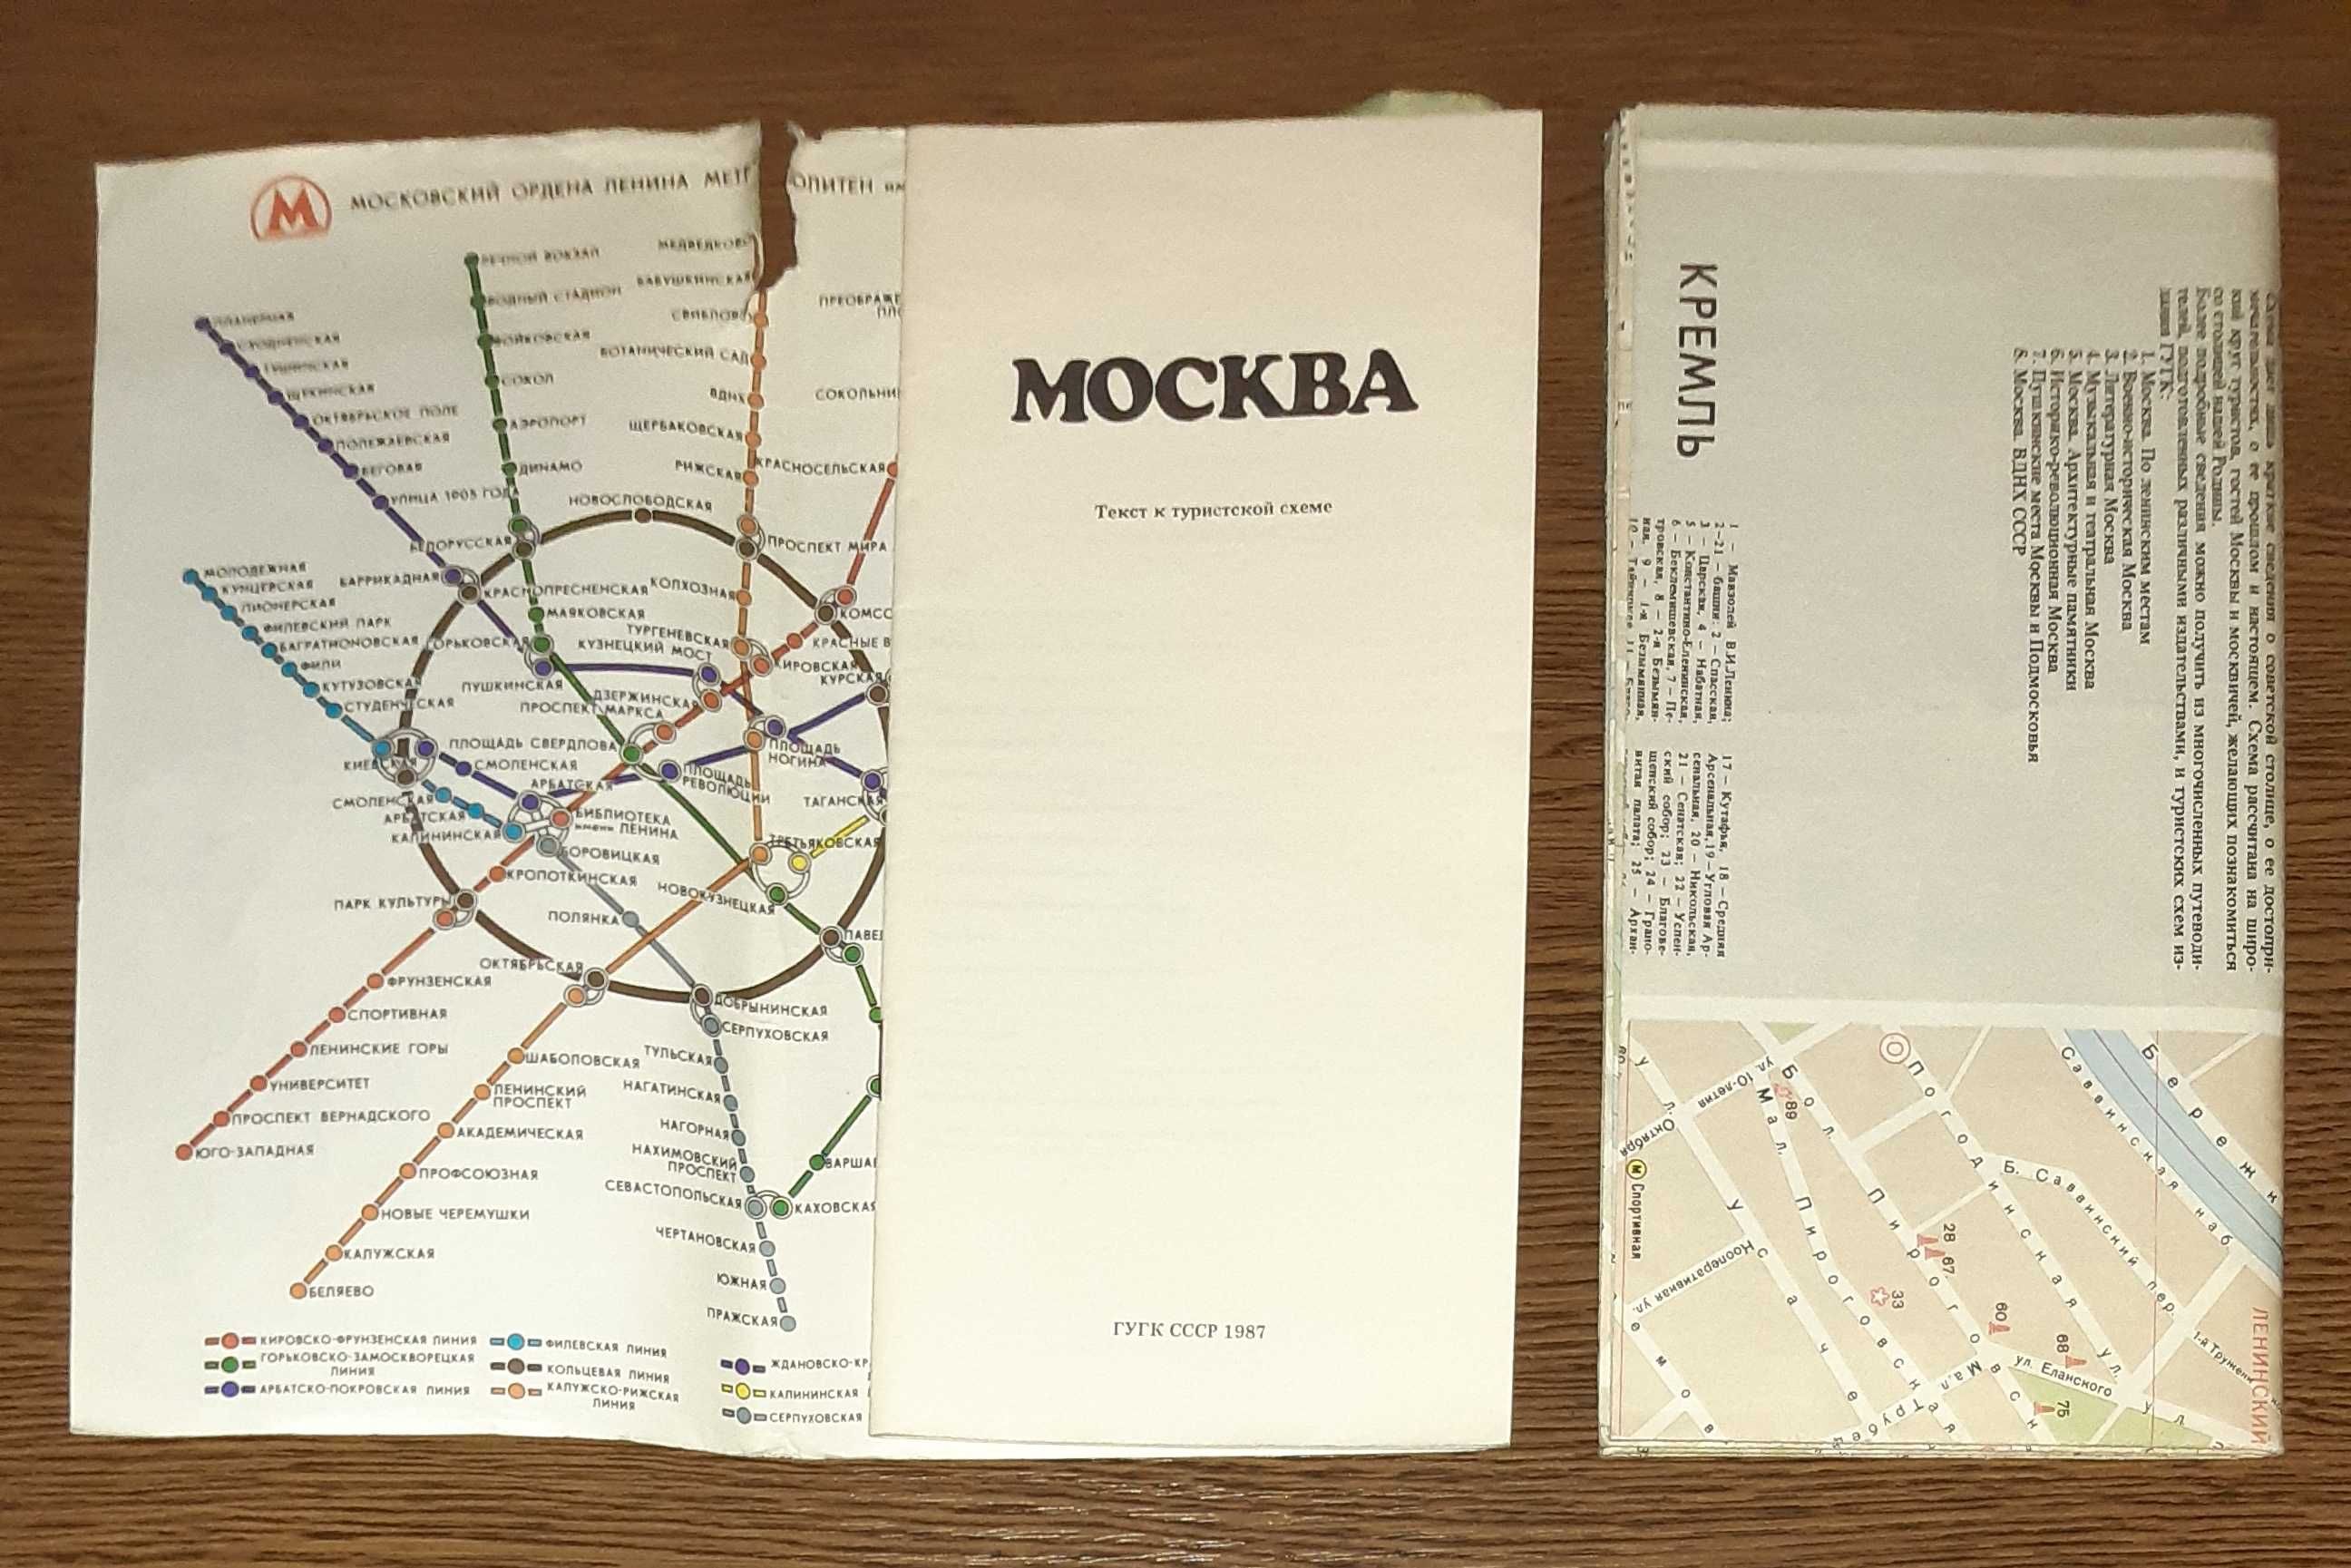 Moskwa - mapa schemat turystyczny 1987 - plan miasta